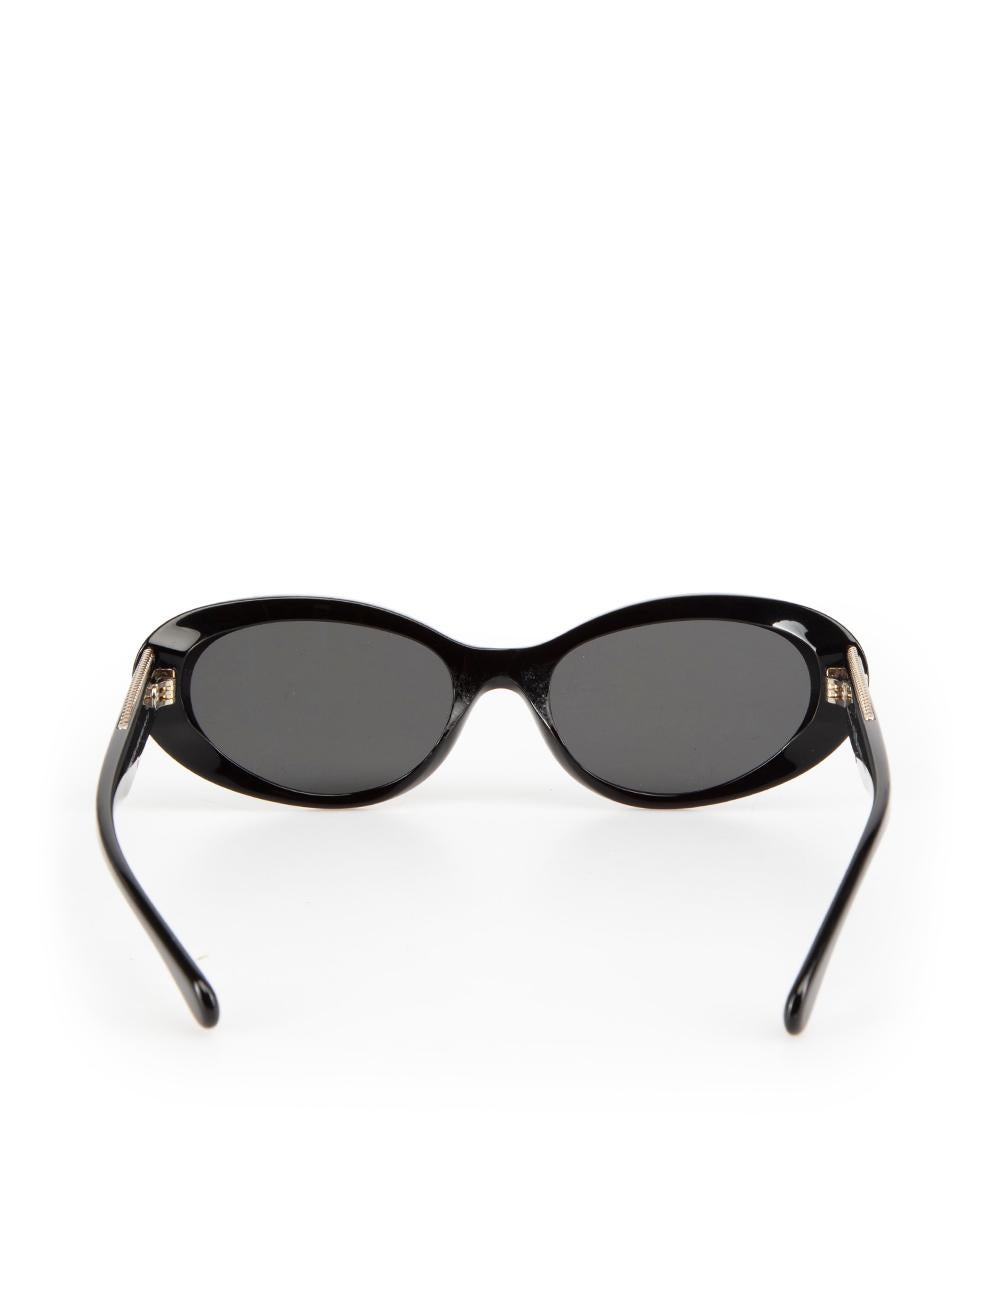 Women's Chanel Black Oval Sunglasses For Sale